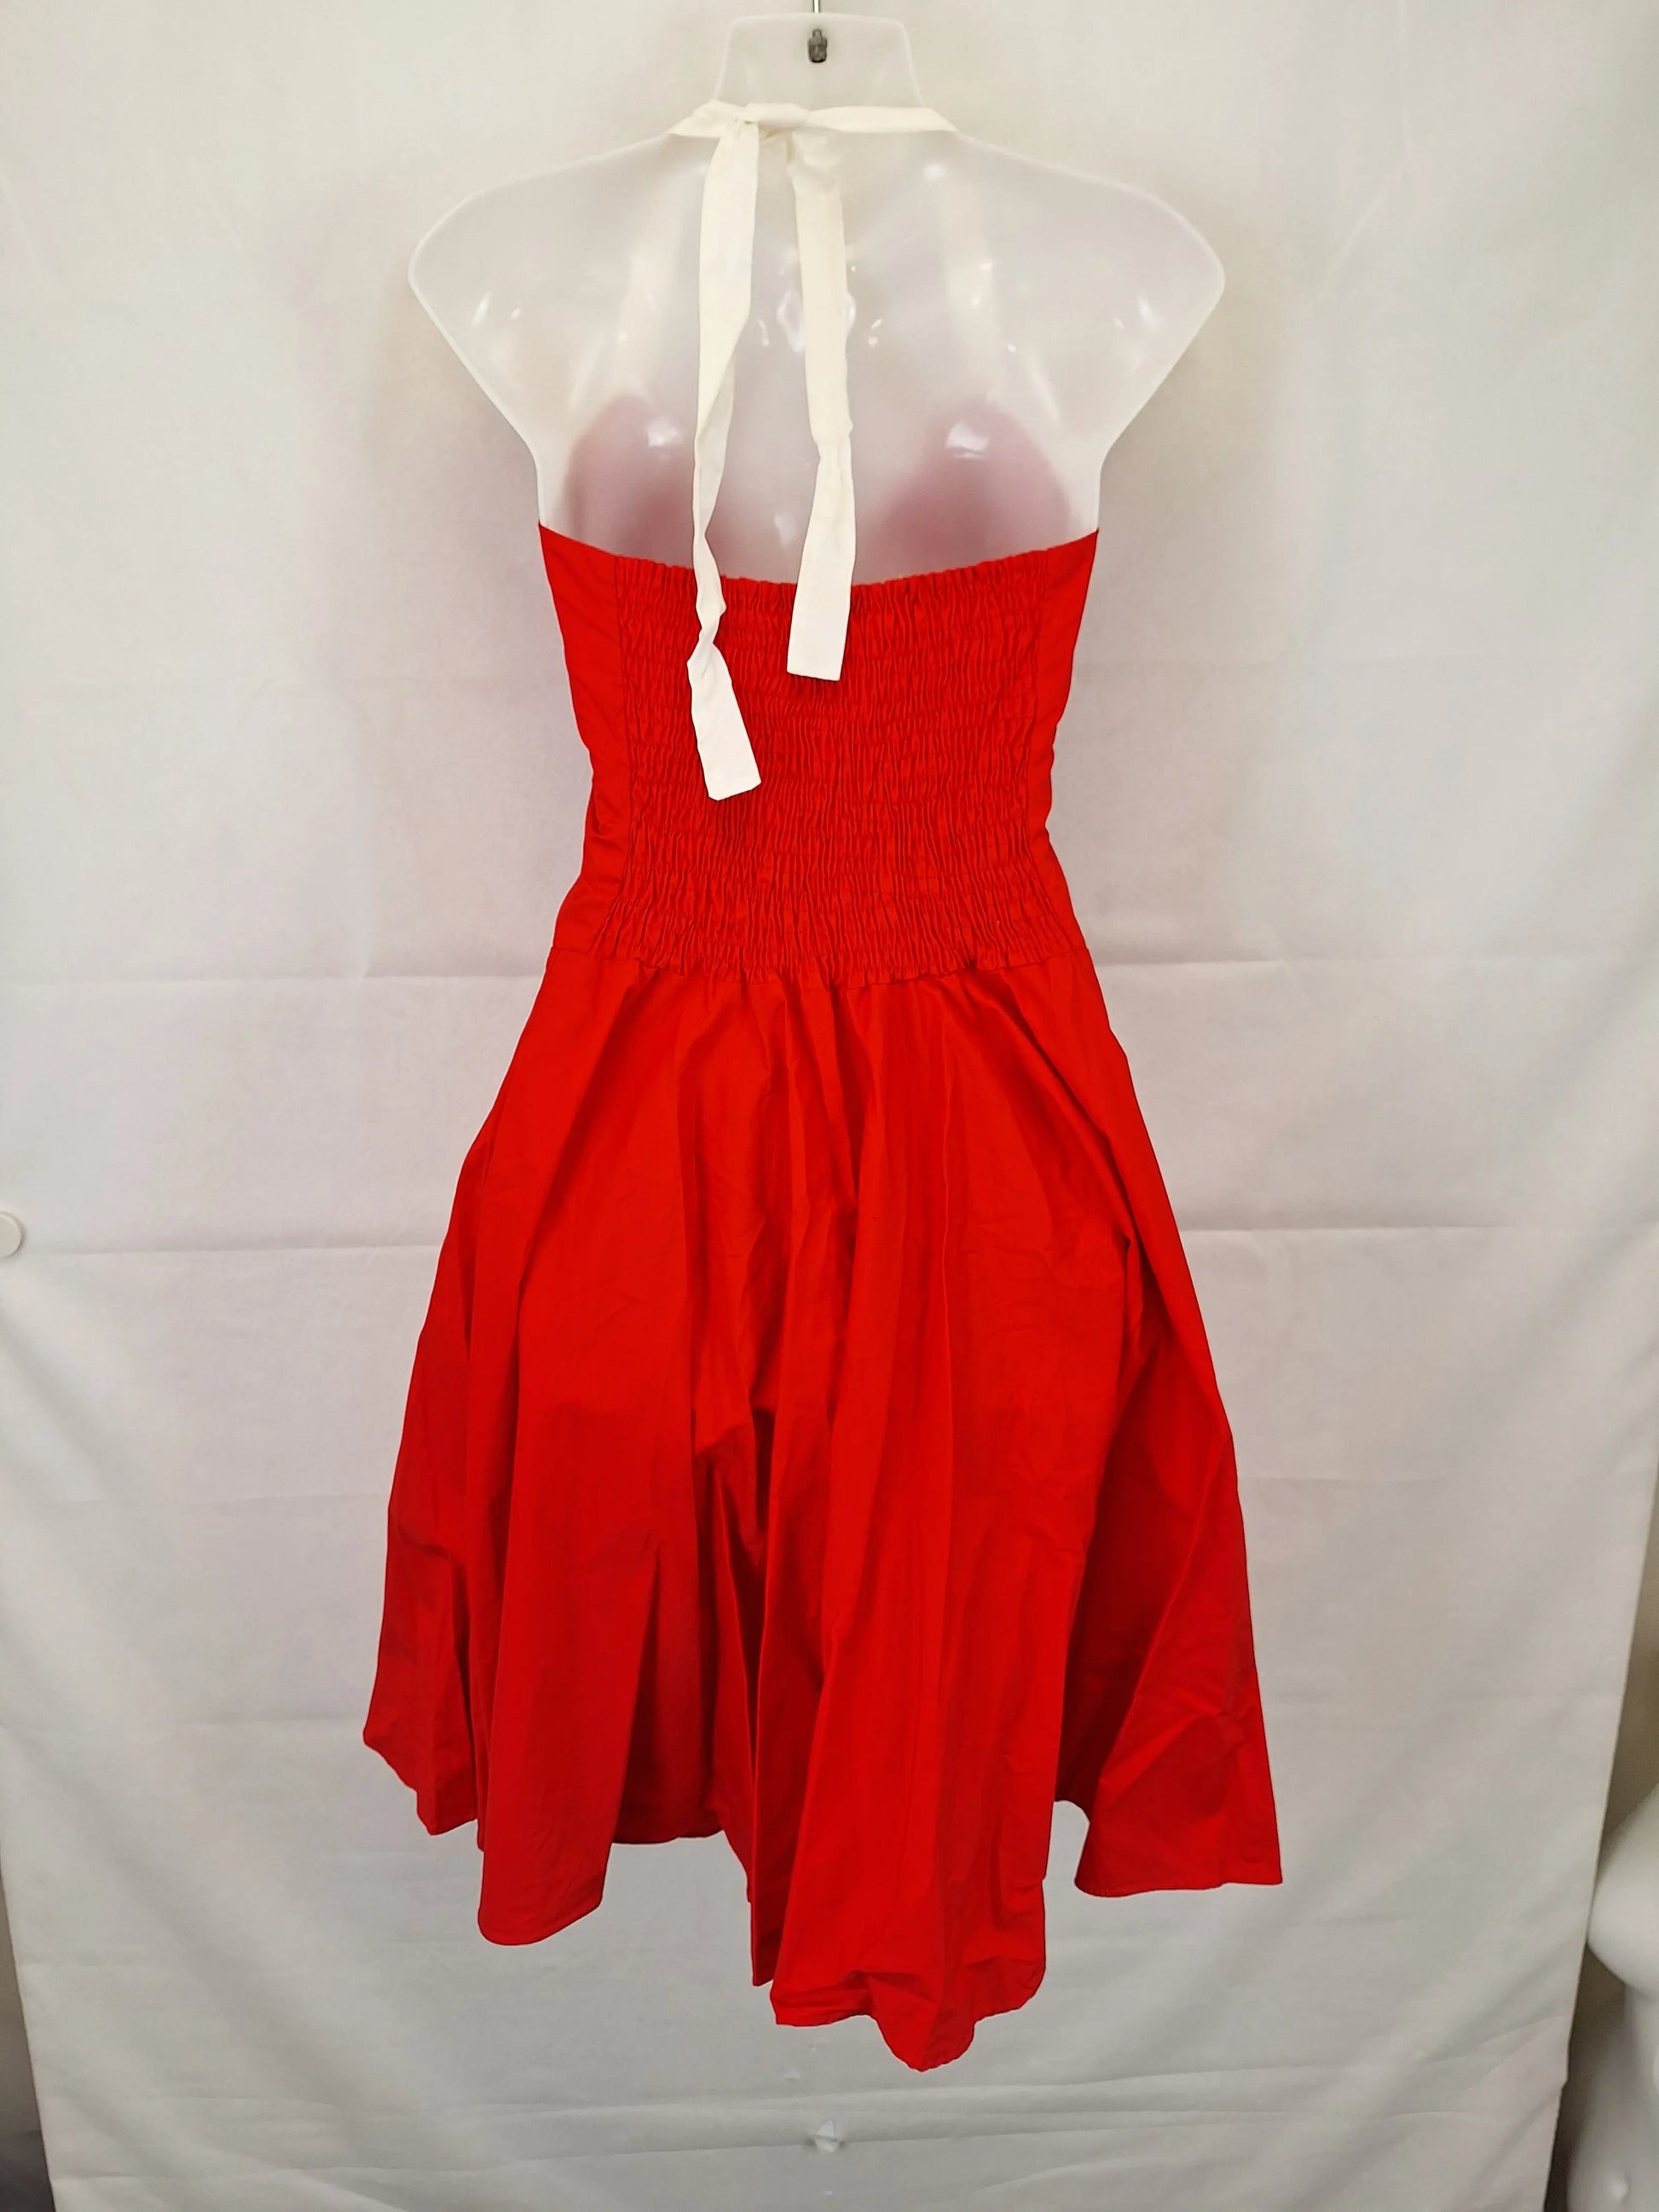 Assorted Brands Retro Halter Neck Midi Dress Size M by SwapUp-Online Second Hand Store-Online Thrift Store